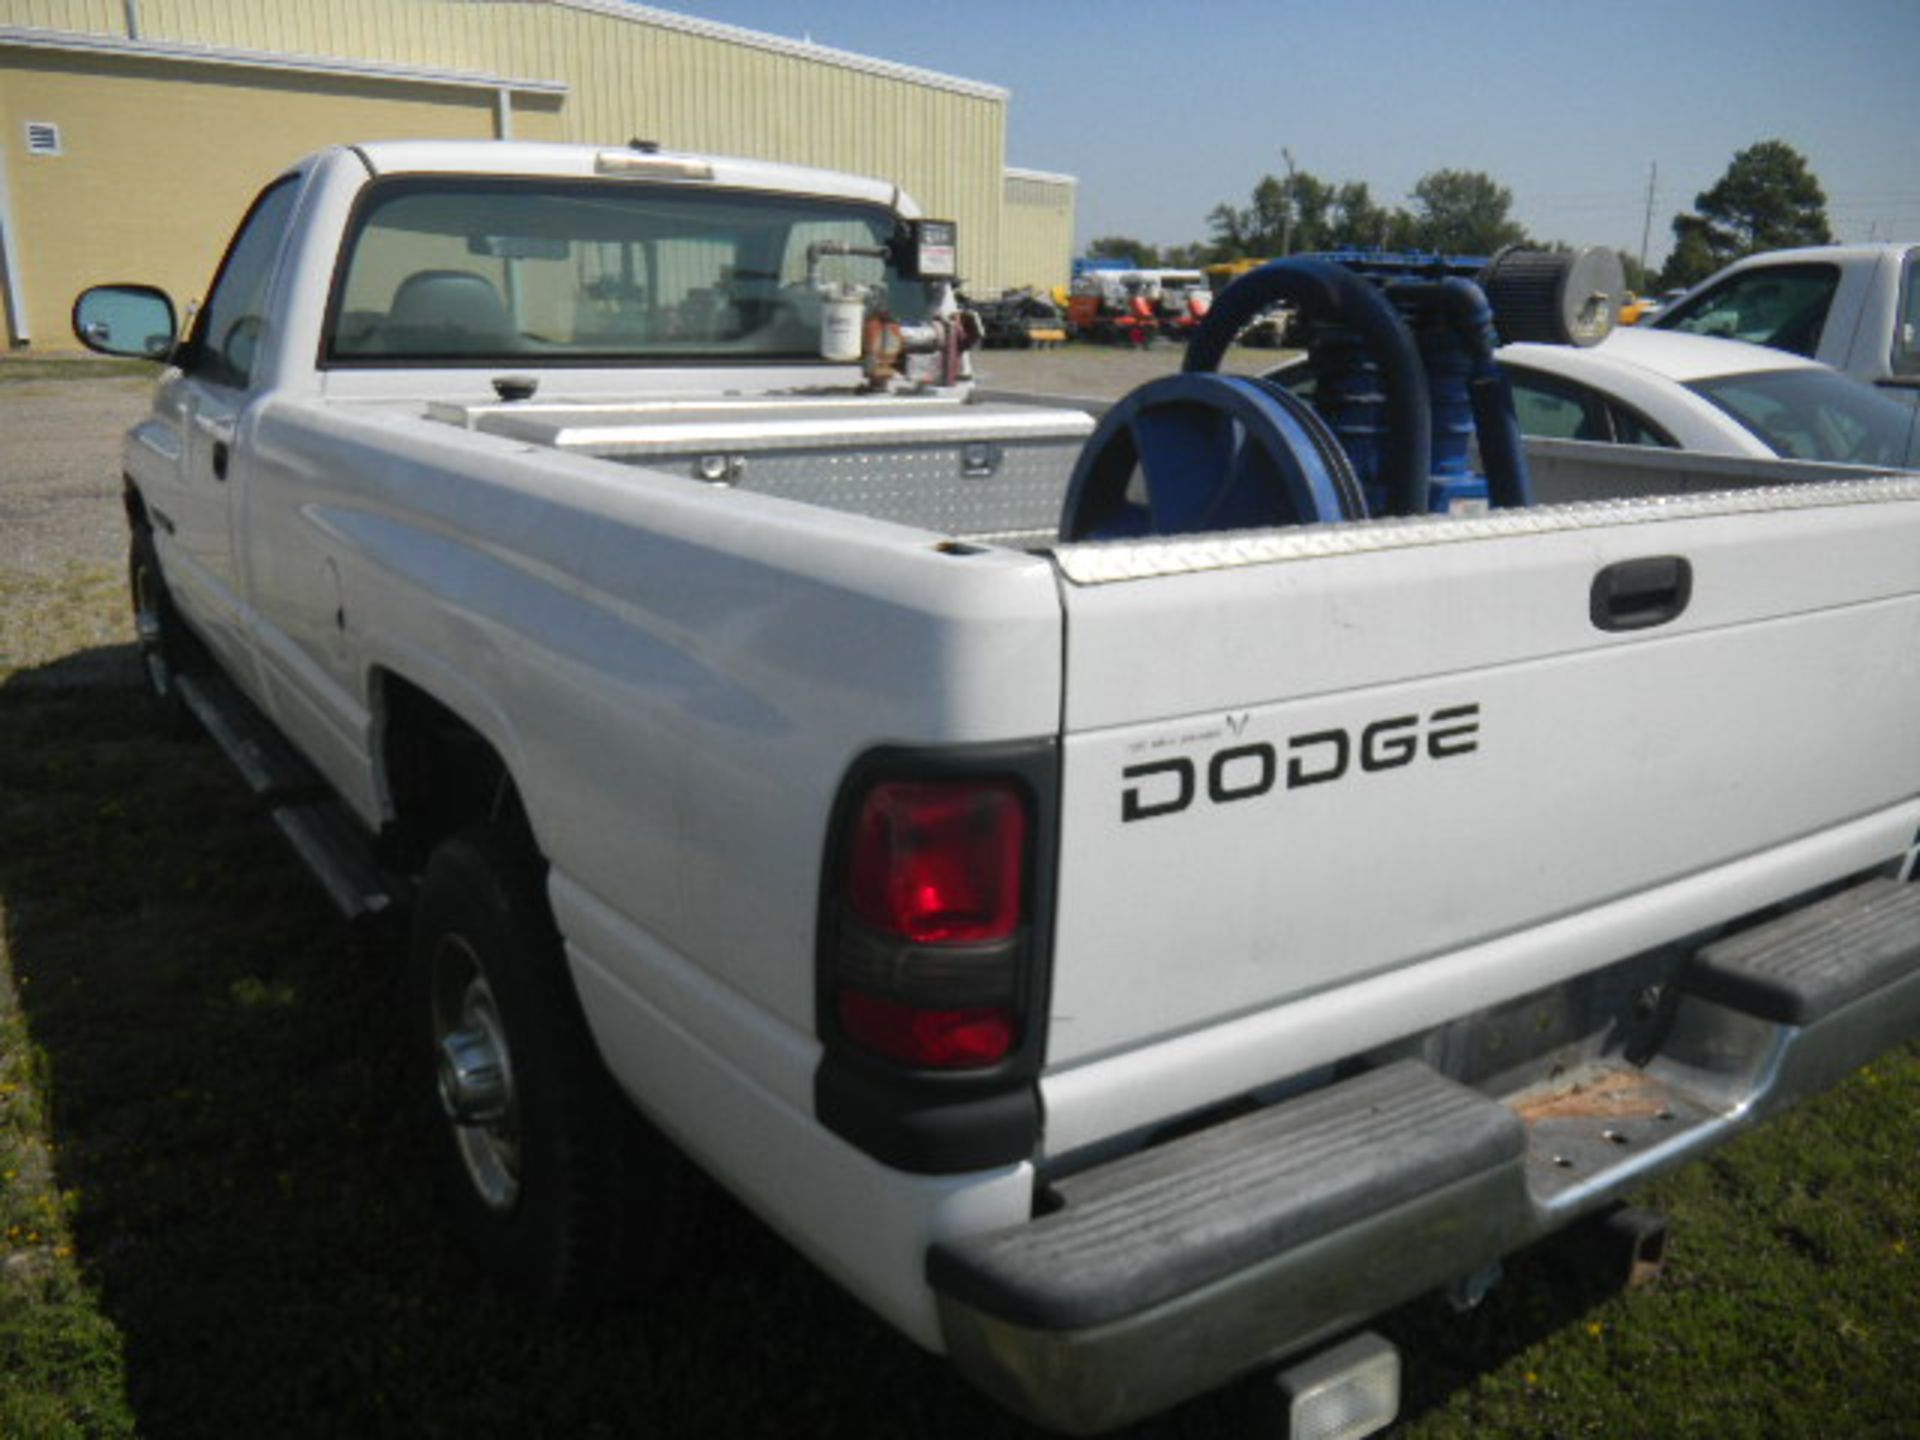 2000 Dodge Ram 2500 White Pickup w/Diamond Plate Fuel Tanks - Asset I.D.#482 - Last of Vin (276108) - Image 5 of 9